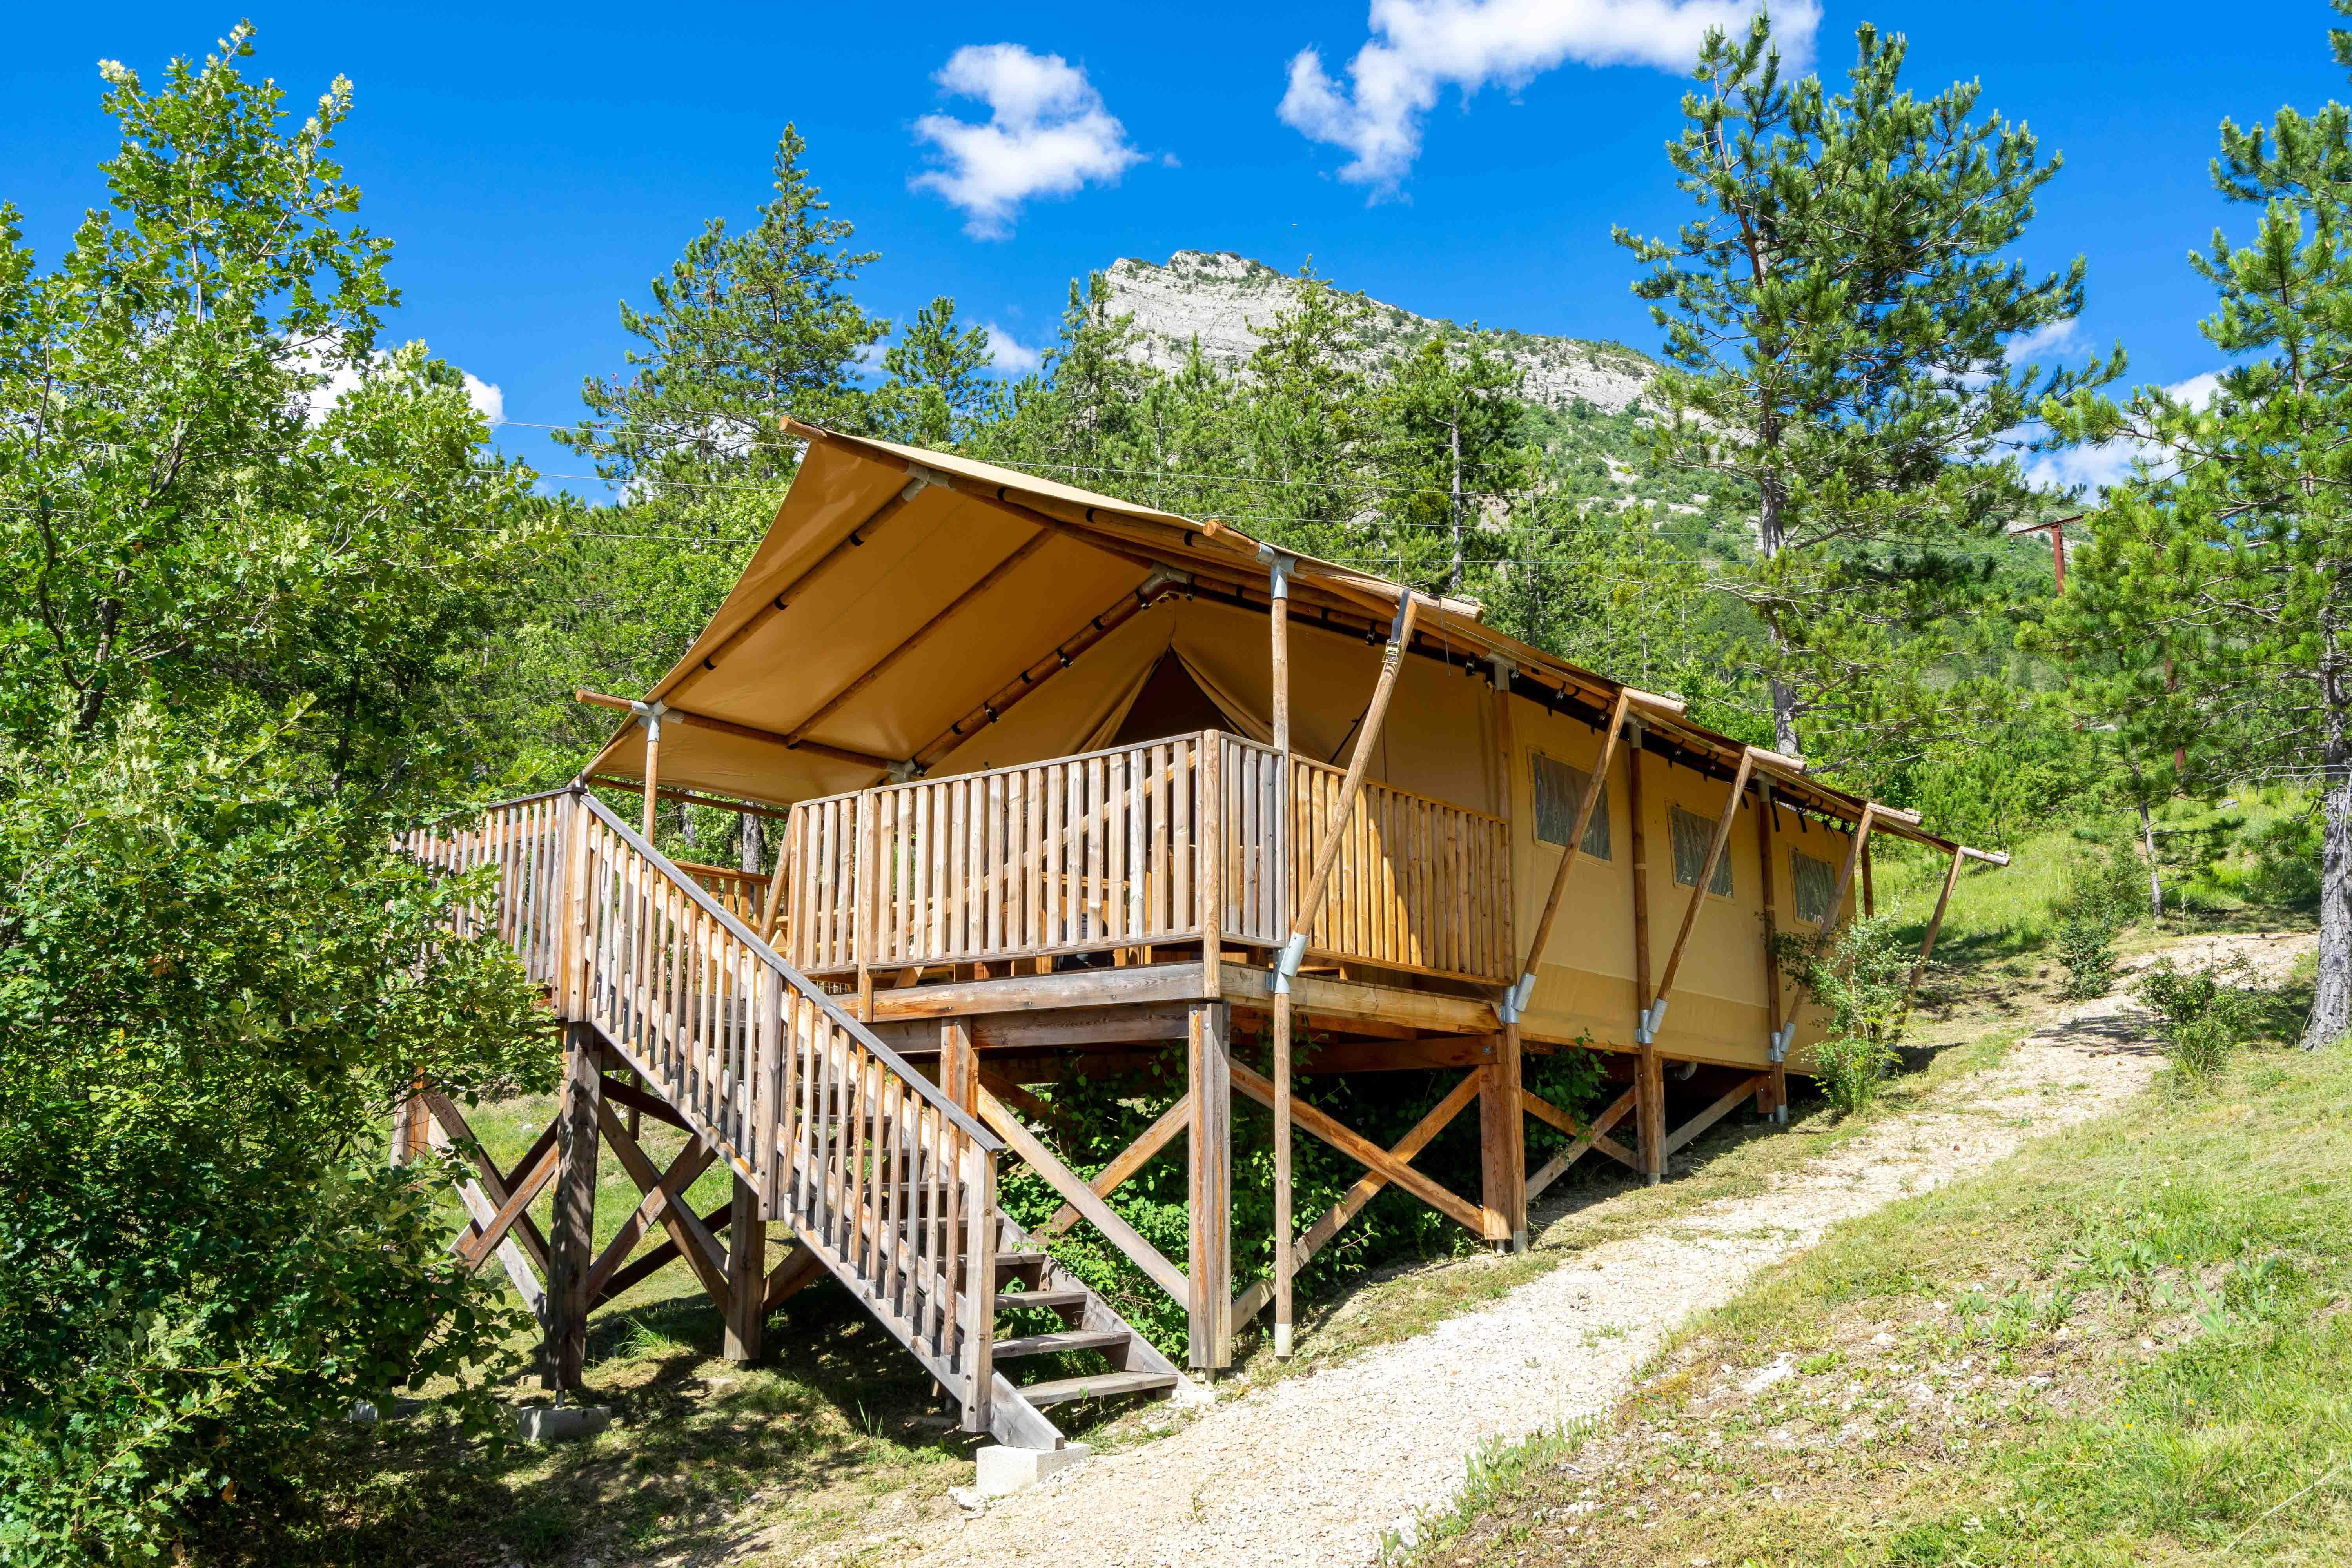 Accommodation - Zelt Lodge Premium 35M² 3 Bedrooms + Terrasse 16M² (Mit Sanitäranlagen) - Flower Camping Le Clot du Jay